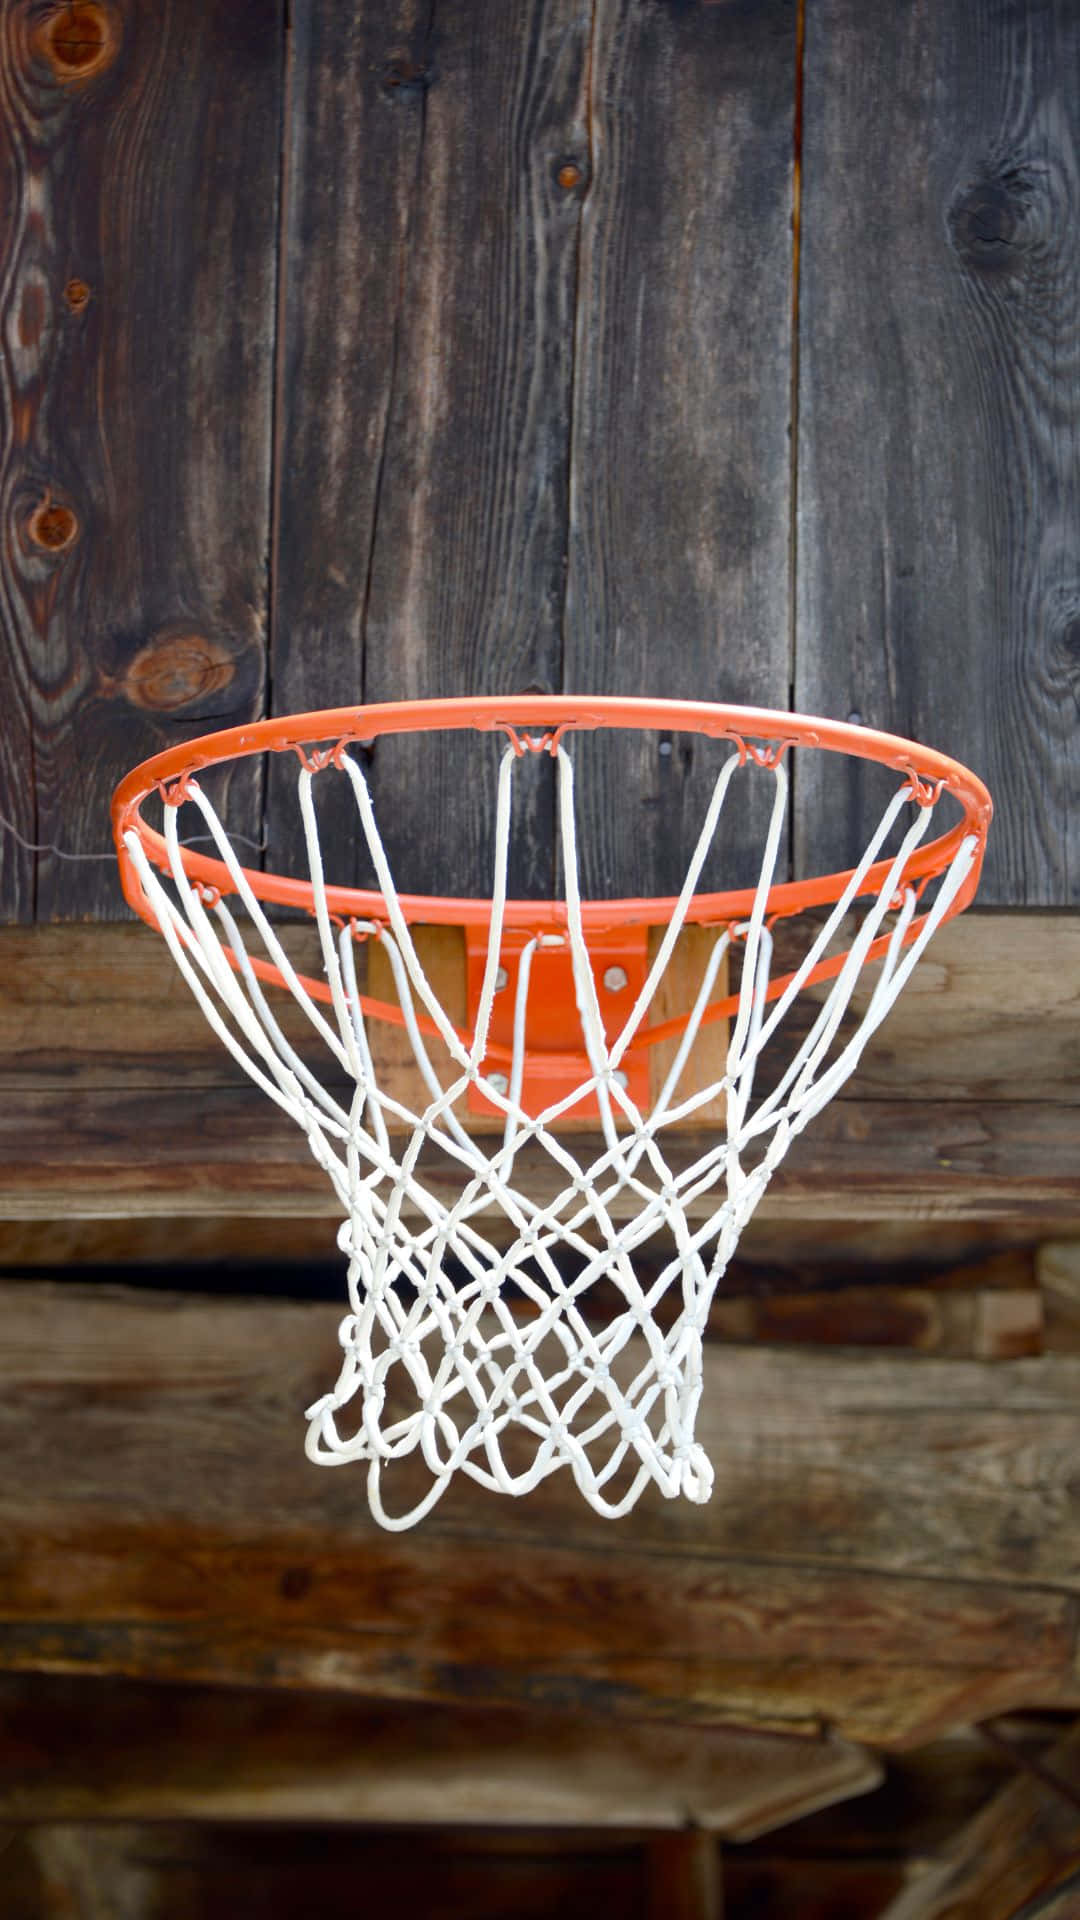 Basketball Hoop Against Wooden Backdrop Background